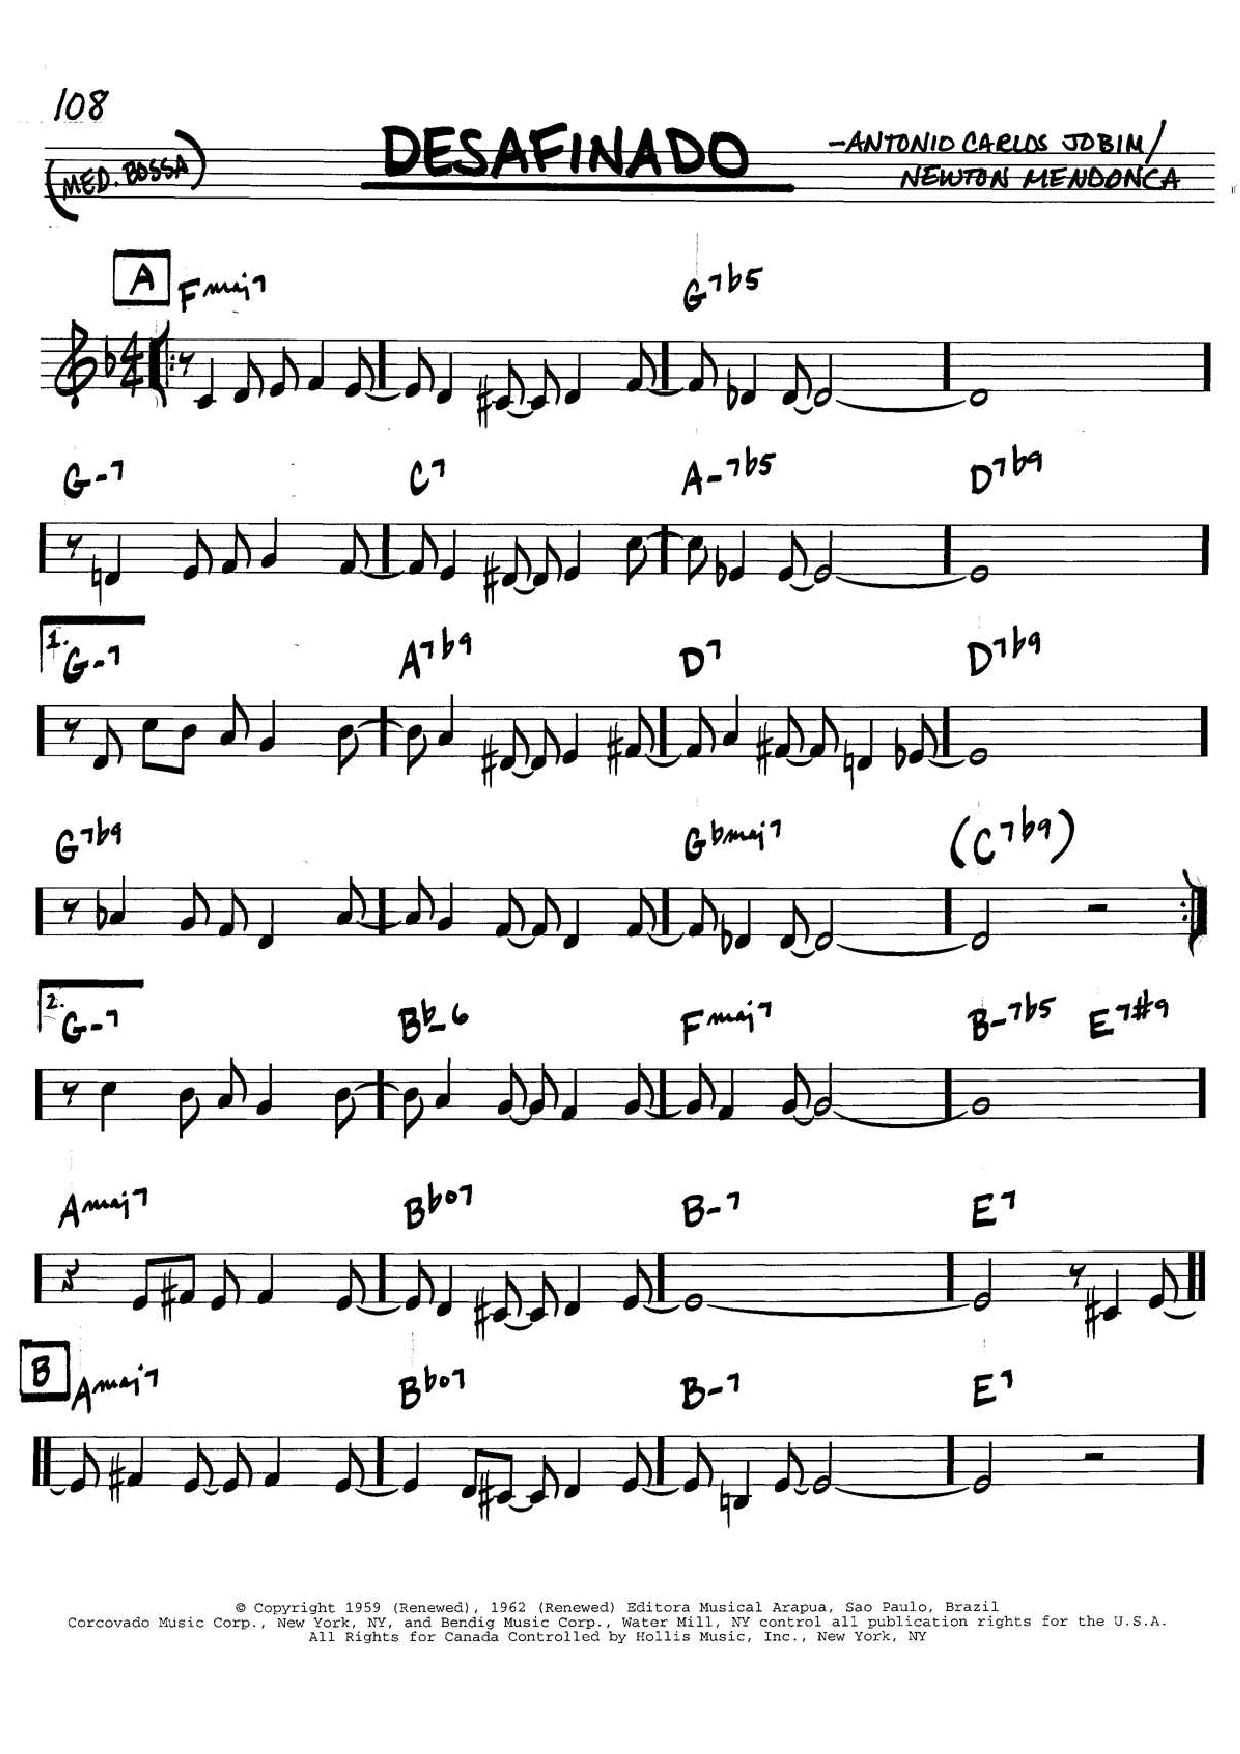 Antonio Carlos Jobim Desafinado sheet music notes printable PDF score